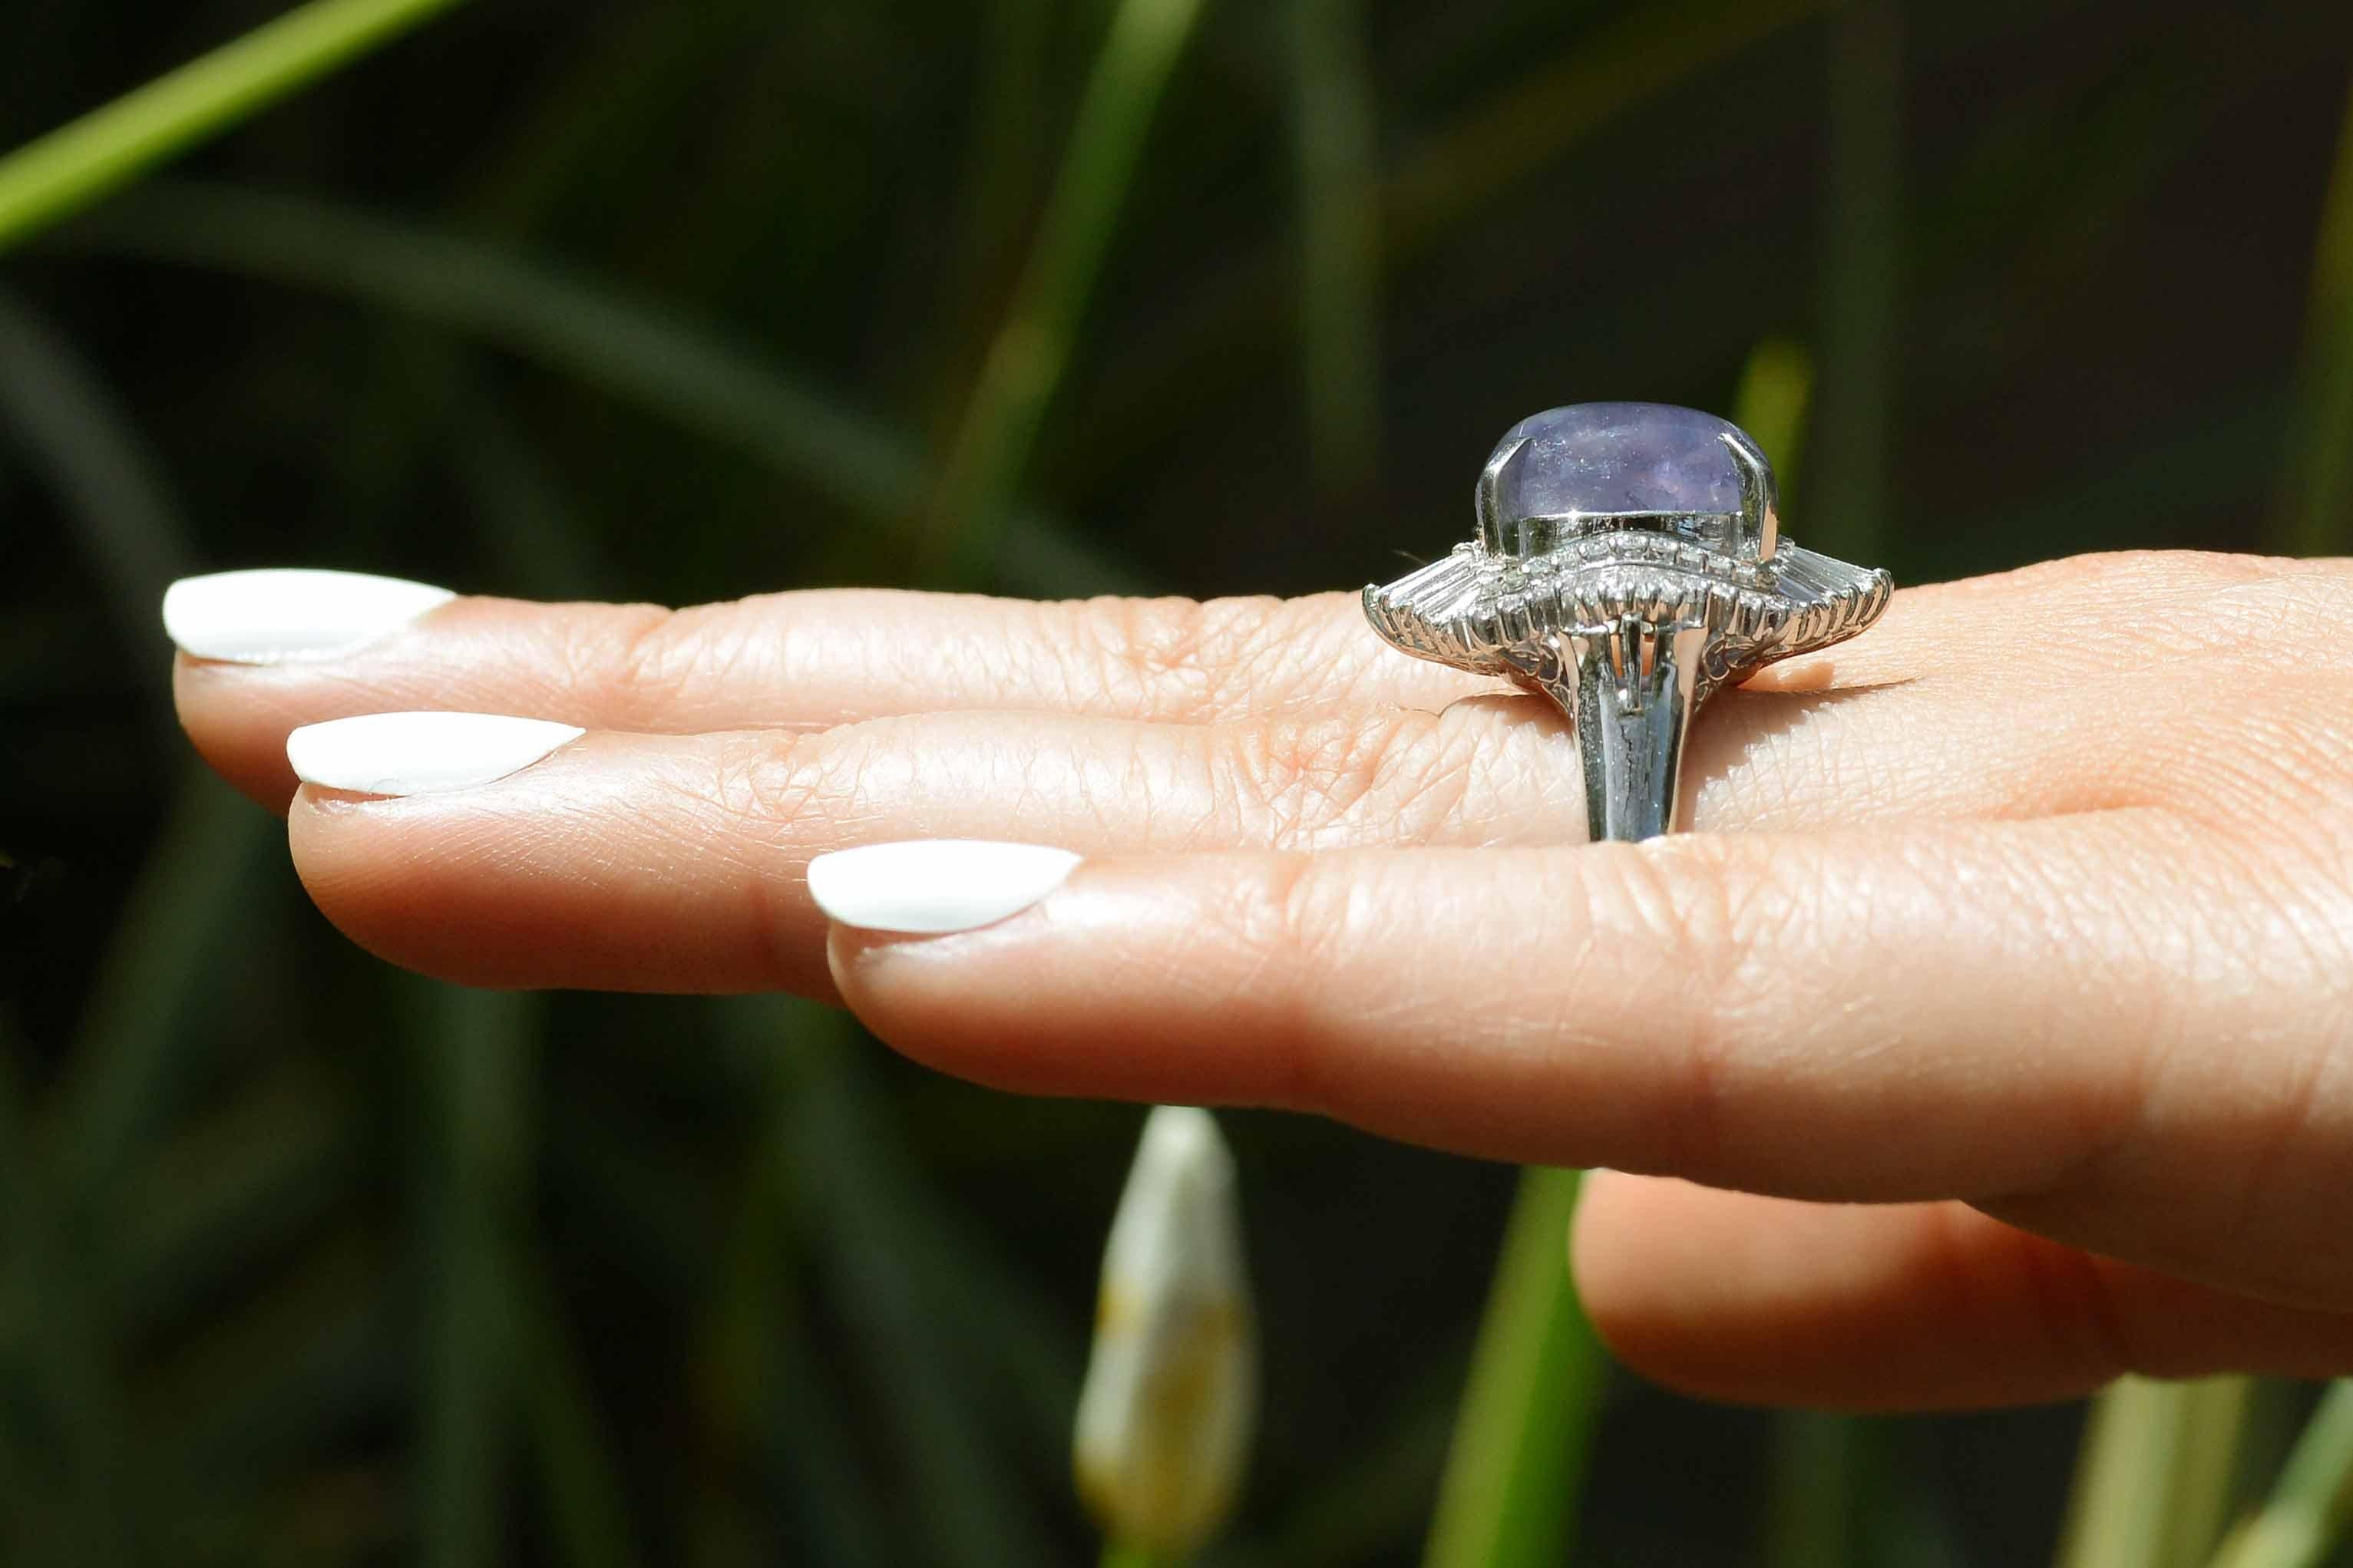 women's star sapphire ring